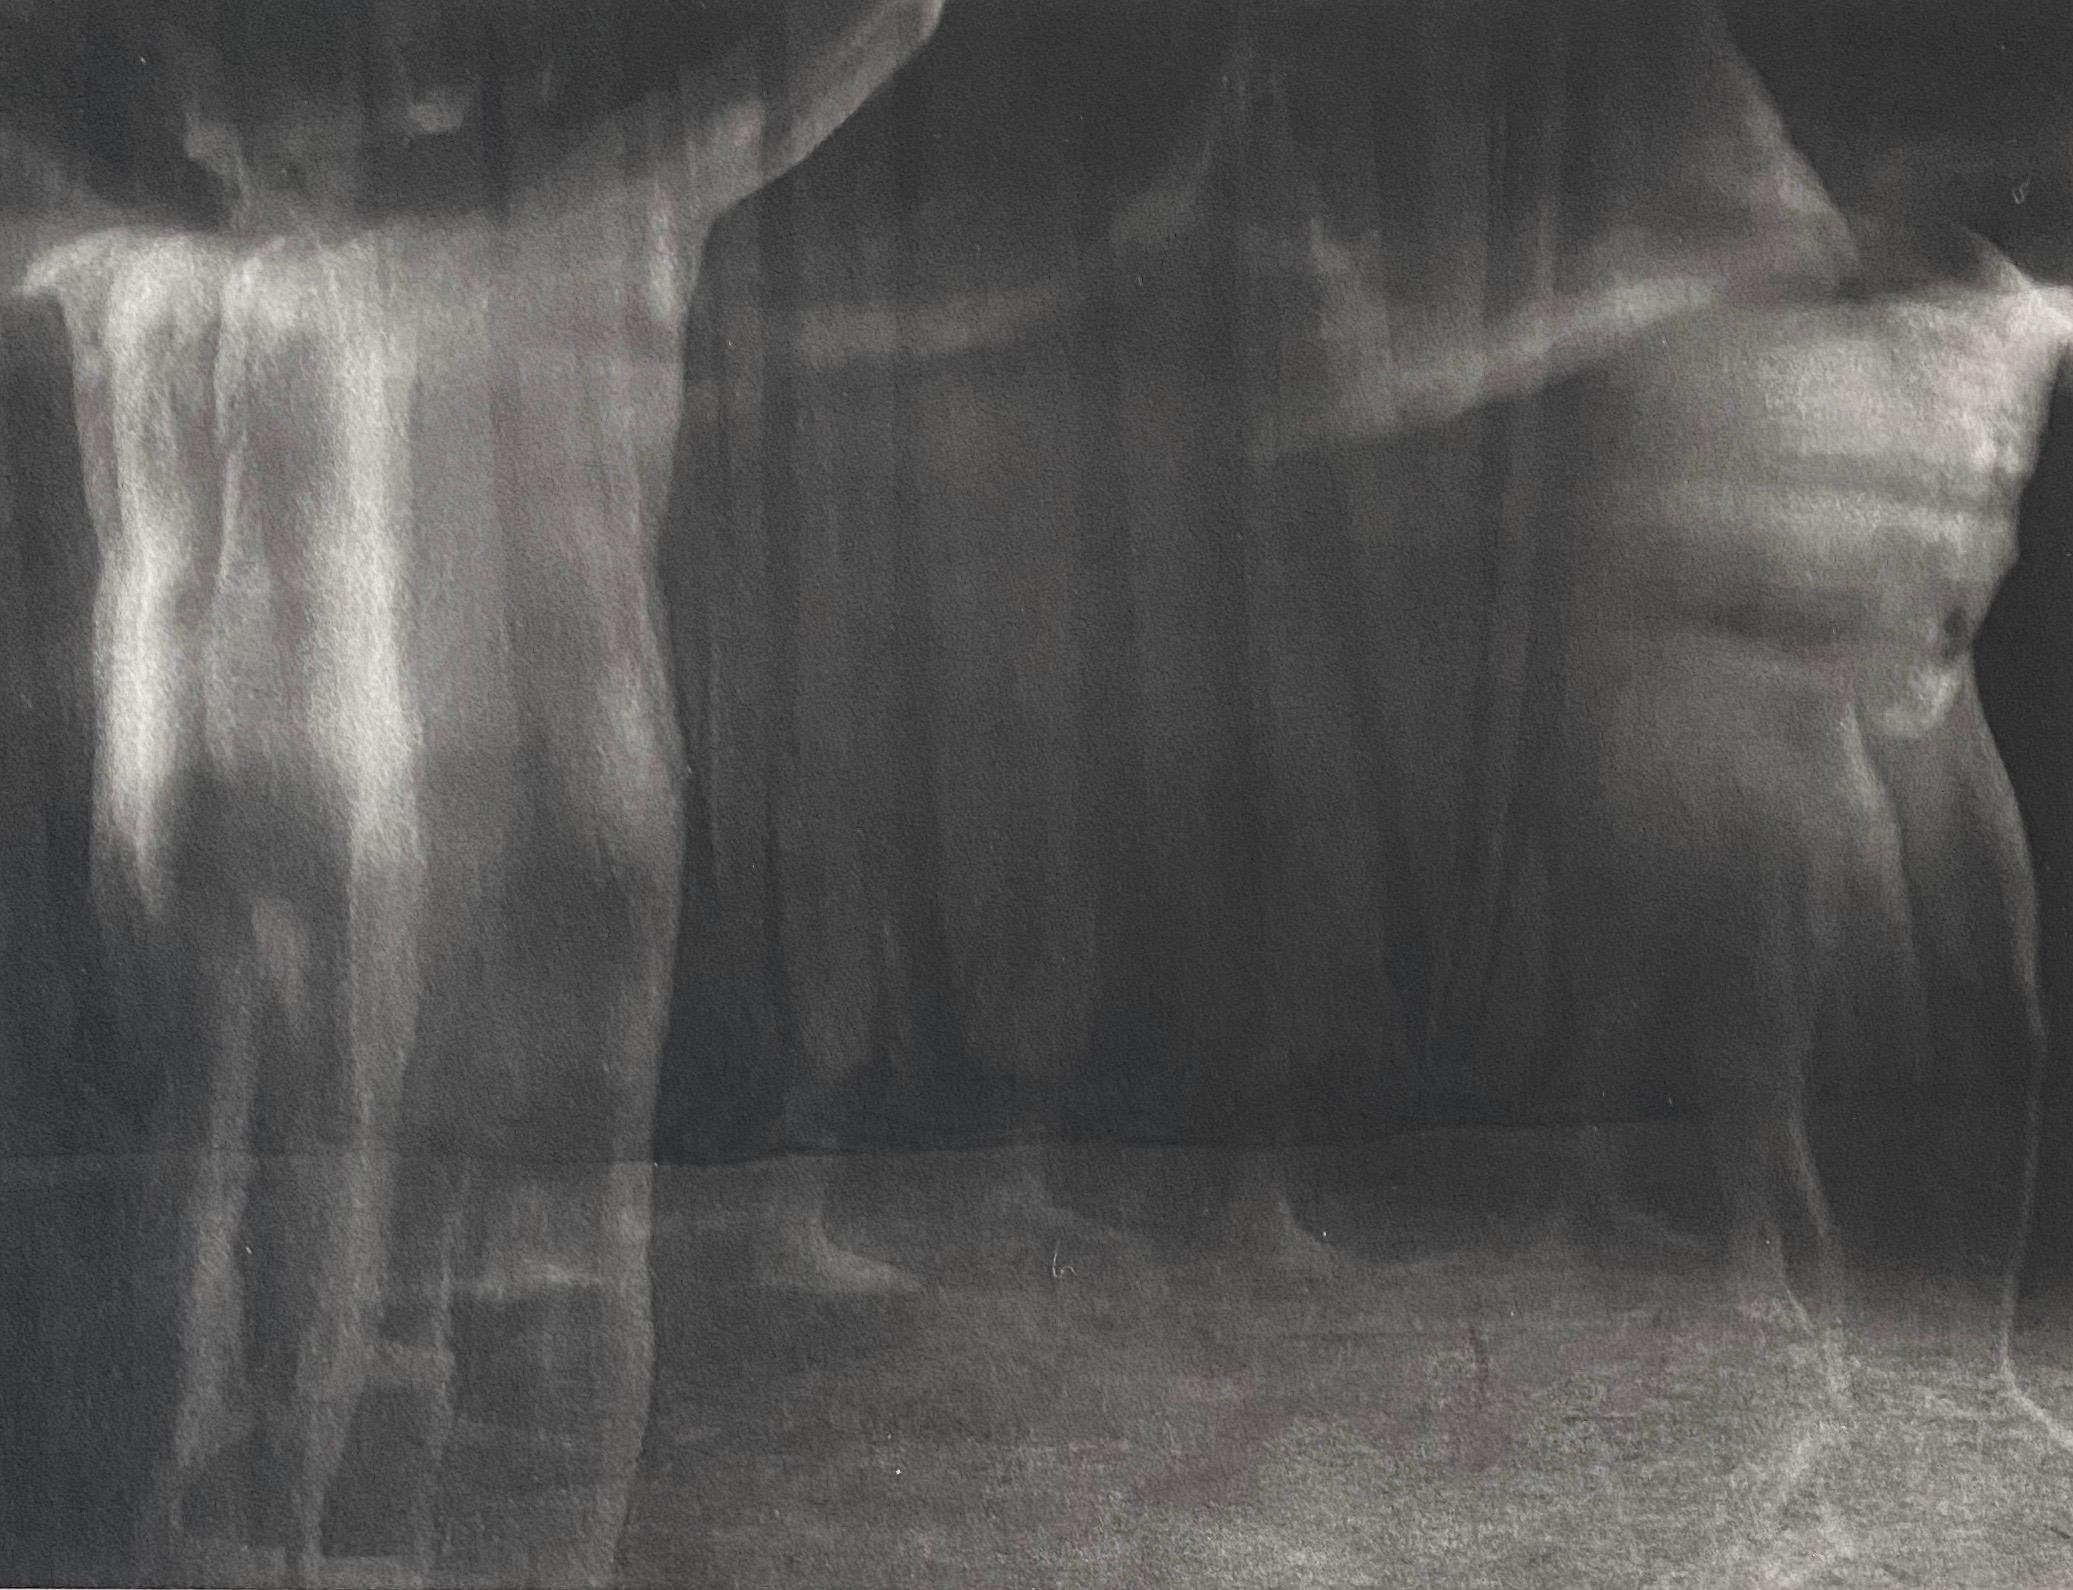 Black and White Photograph Skip Arnold - Photographie vintage d'homme nu en platine imprimé 'Ring Around the Rosie' 